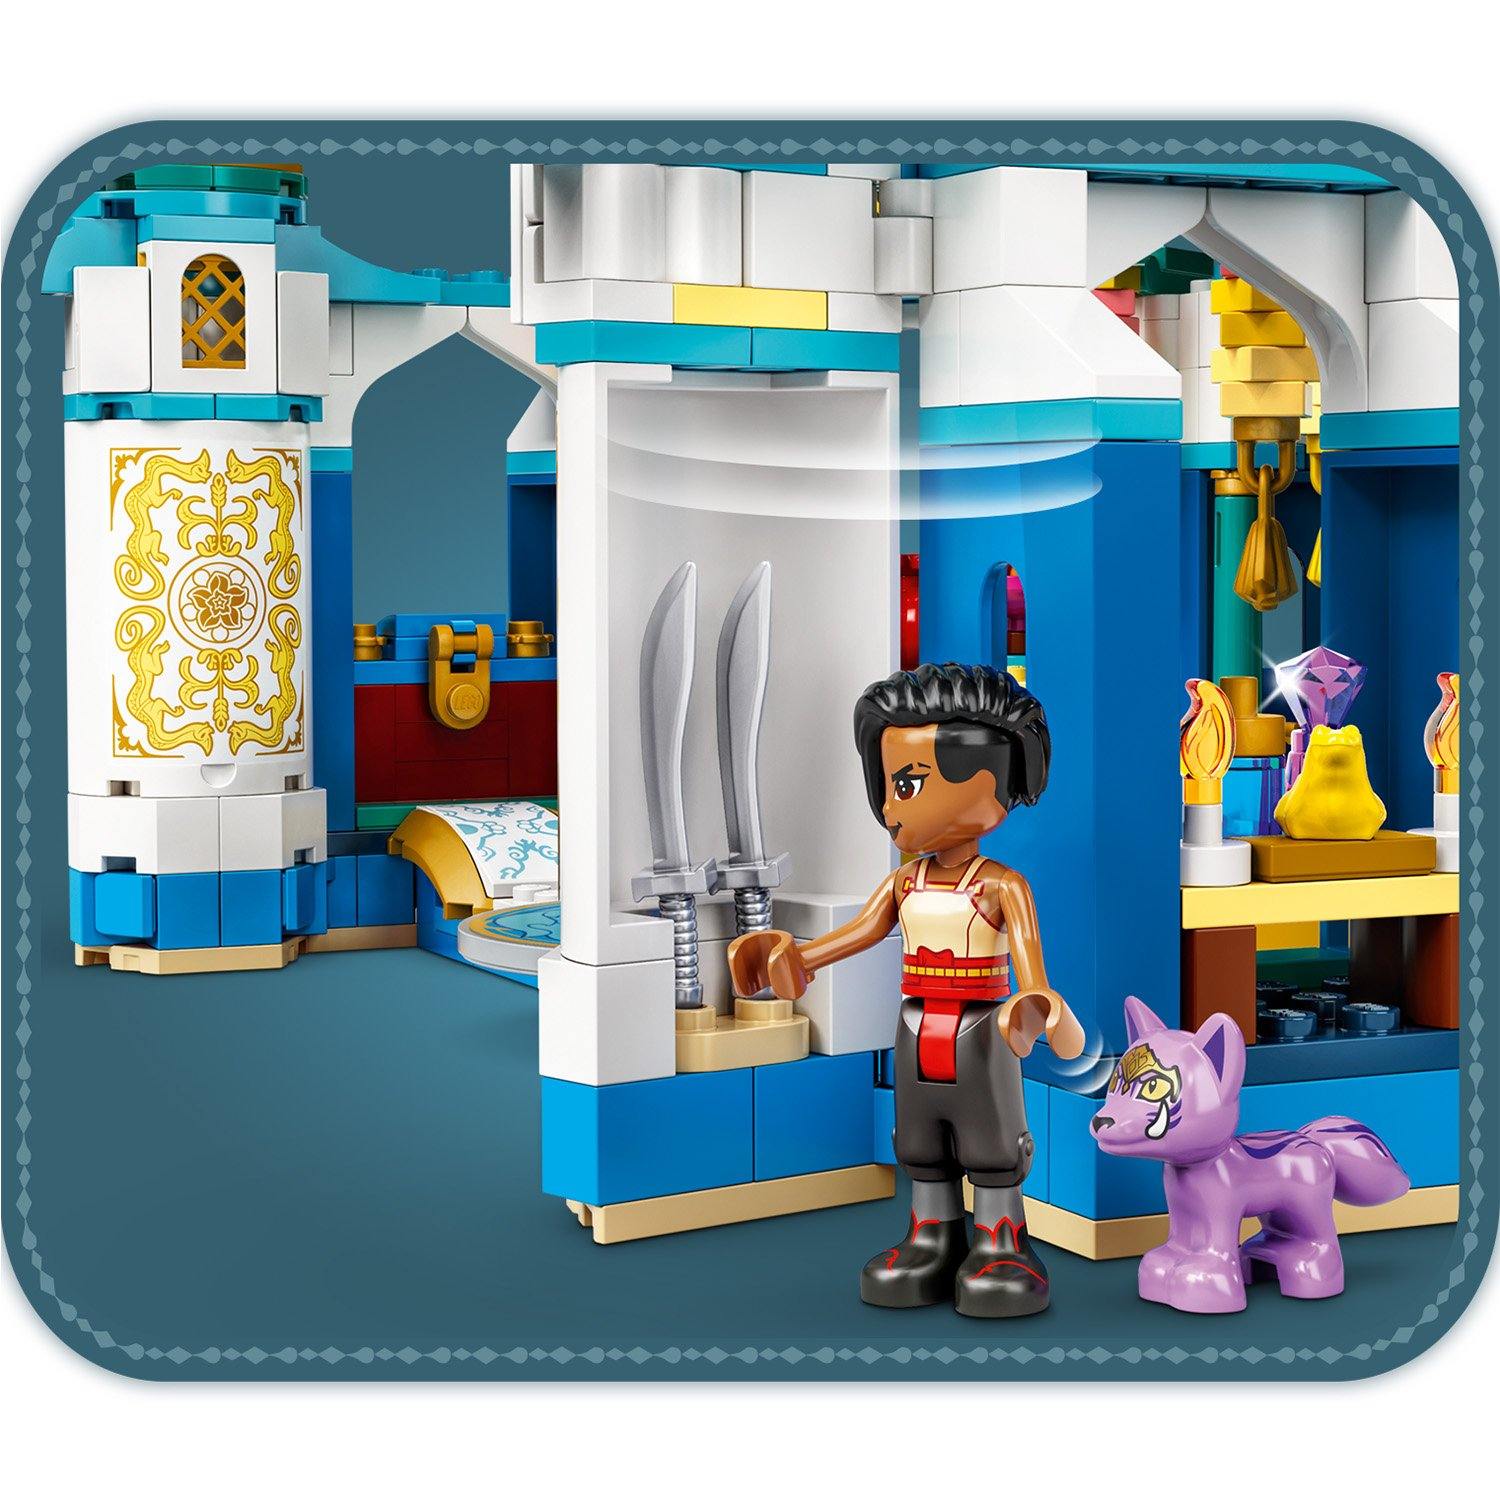 LEGO® Disney™ Raja i Palata srca - LEGO® Store Srbija